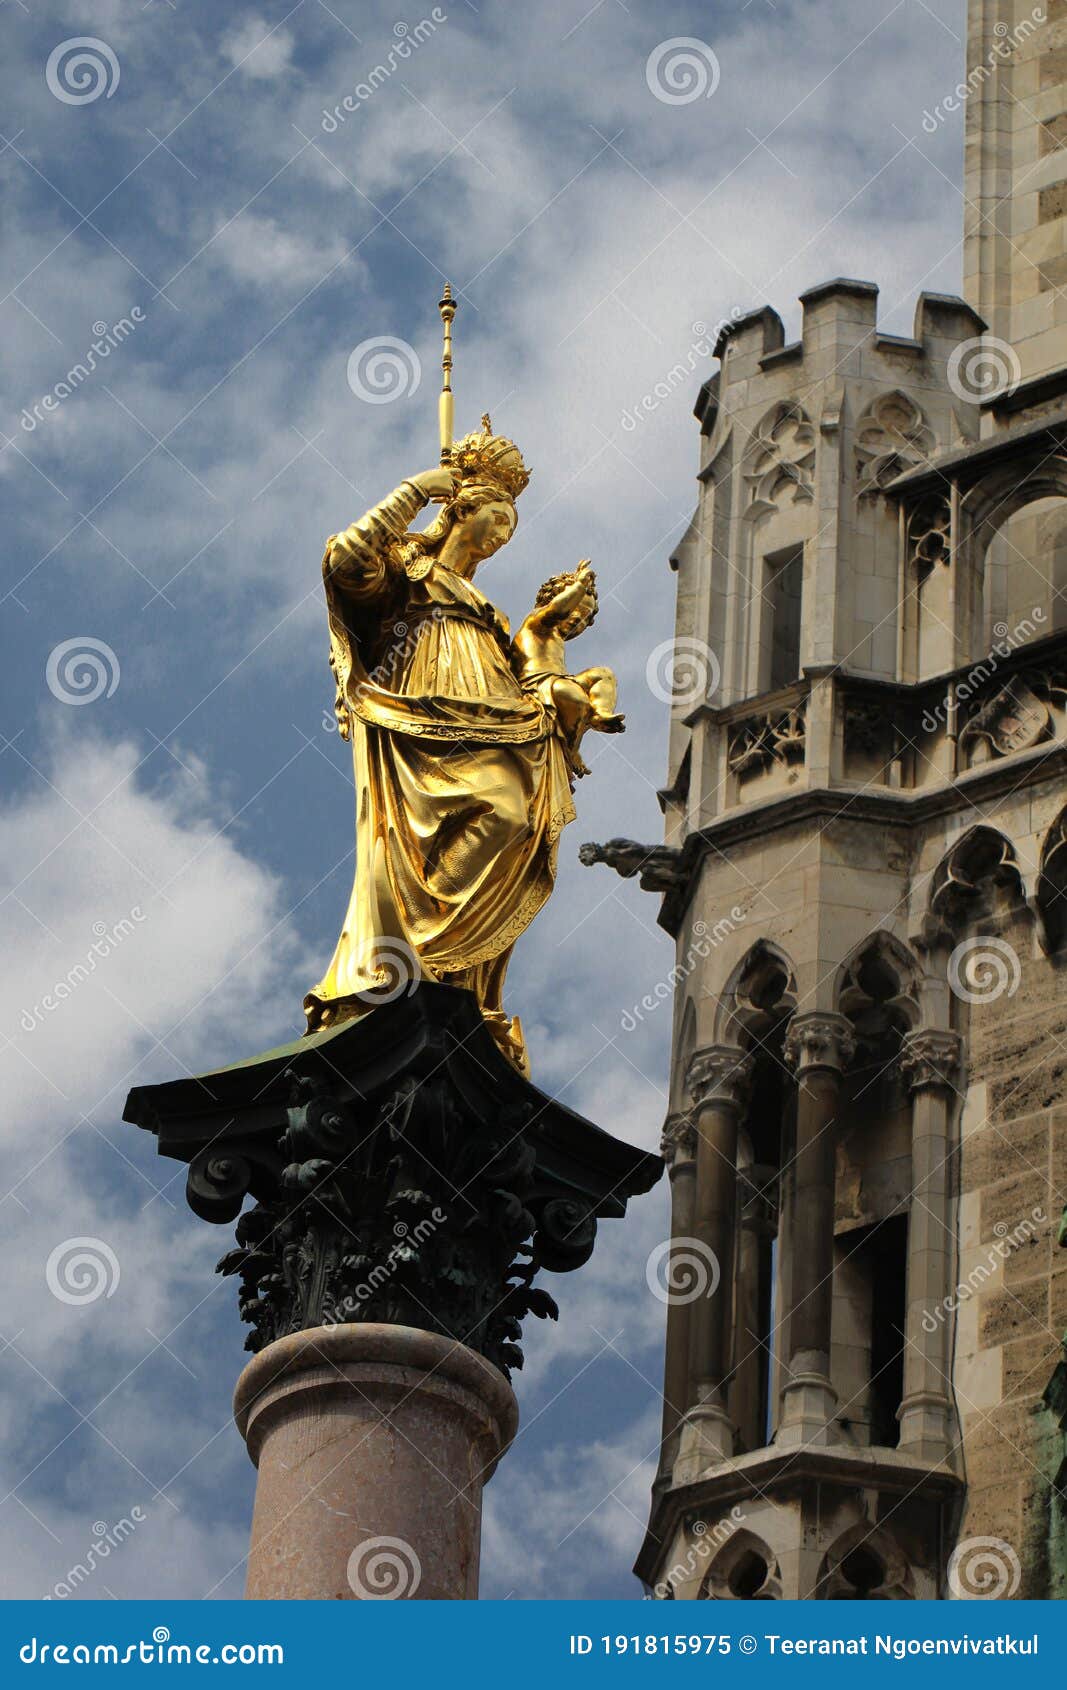 golden scuplture of virgin mary at  marienplatz under blue sky backgrounds, munich, germany, travel